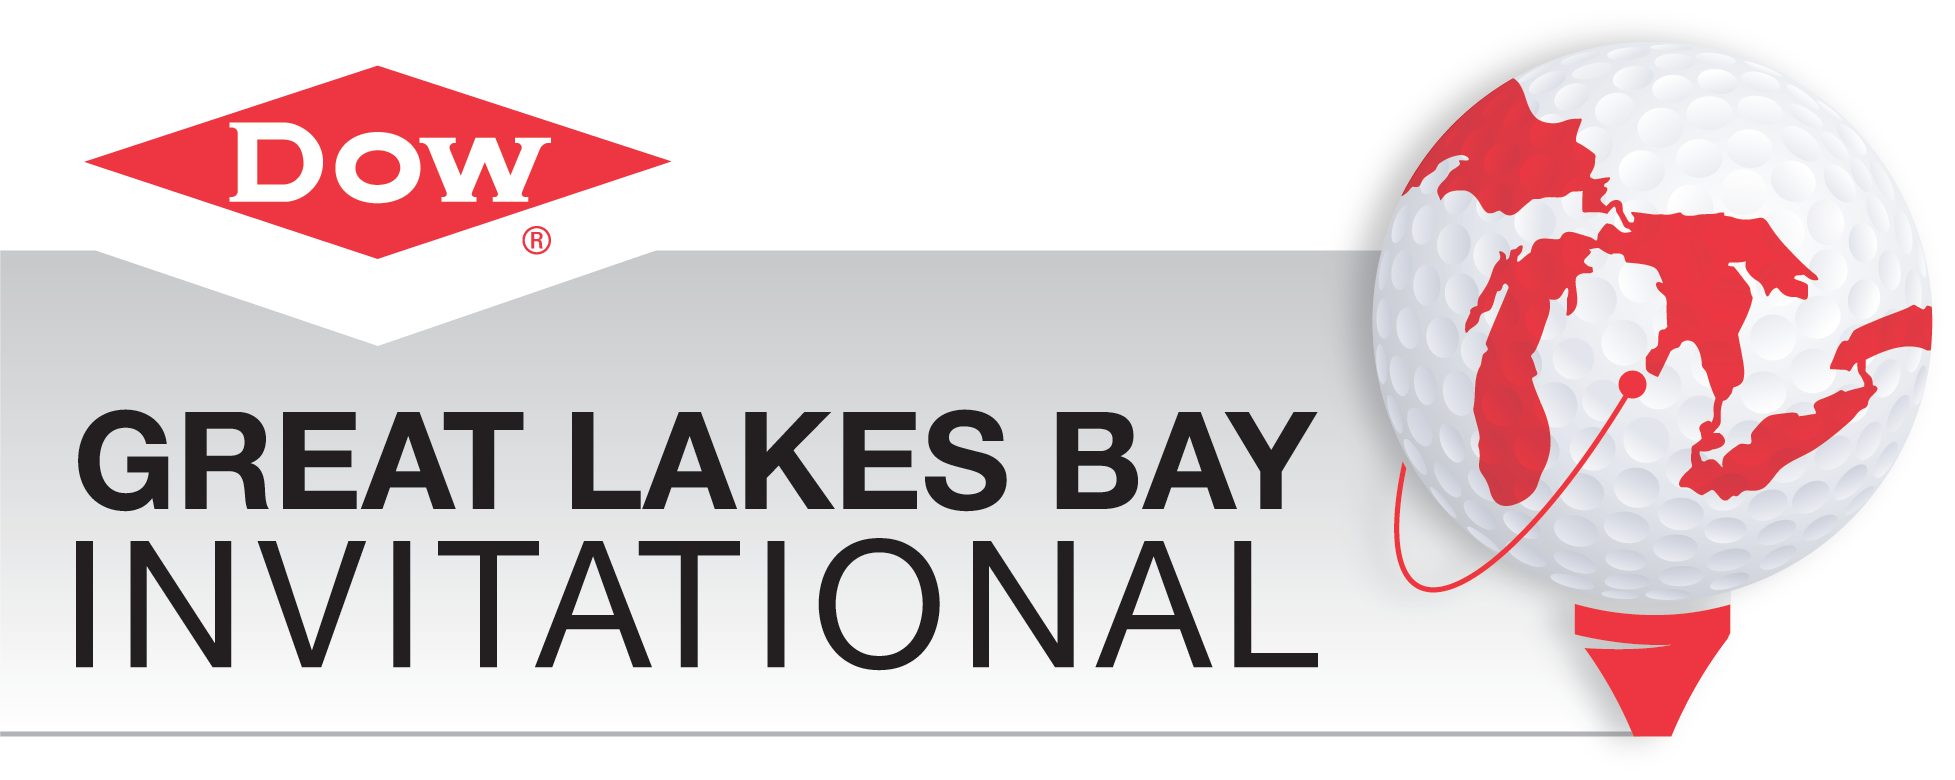 Dow Great Lakes Bay Invitational วันที่ 2